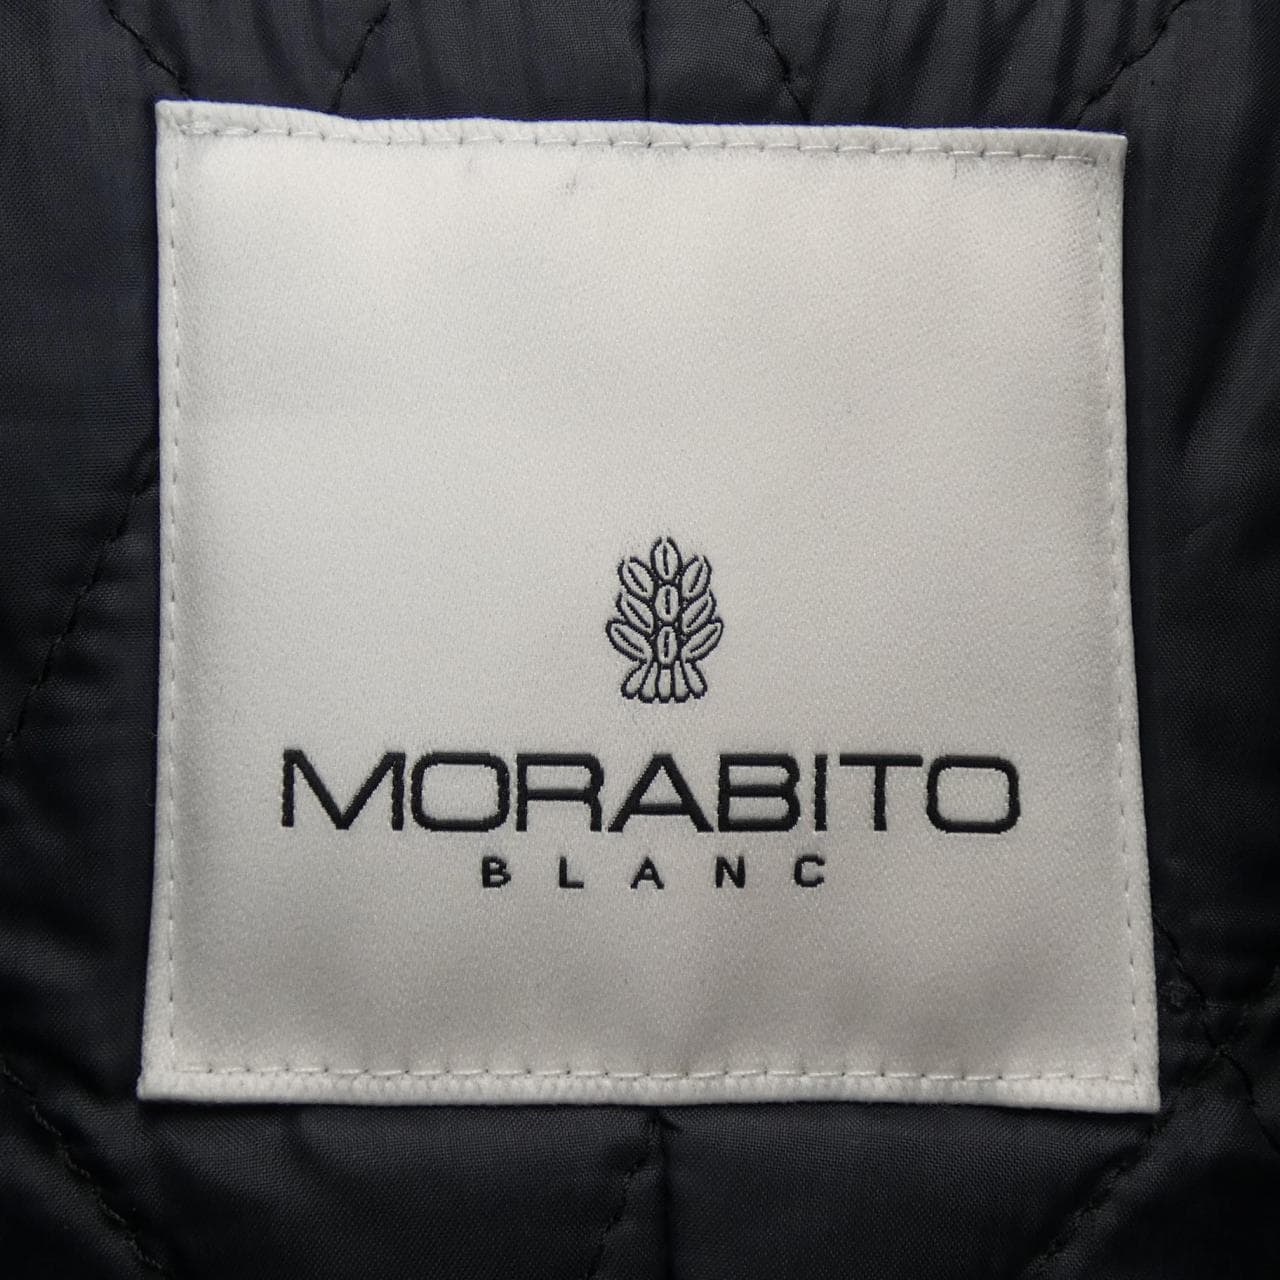 Morabito Blanc MORABITO BLANC夾克